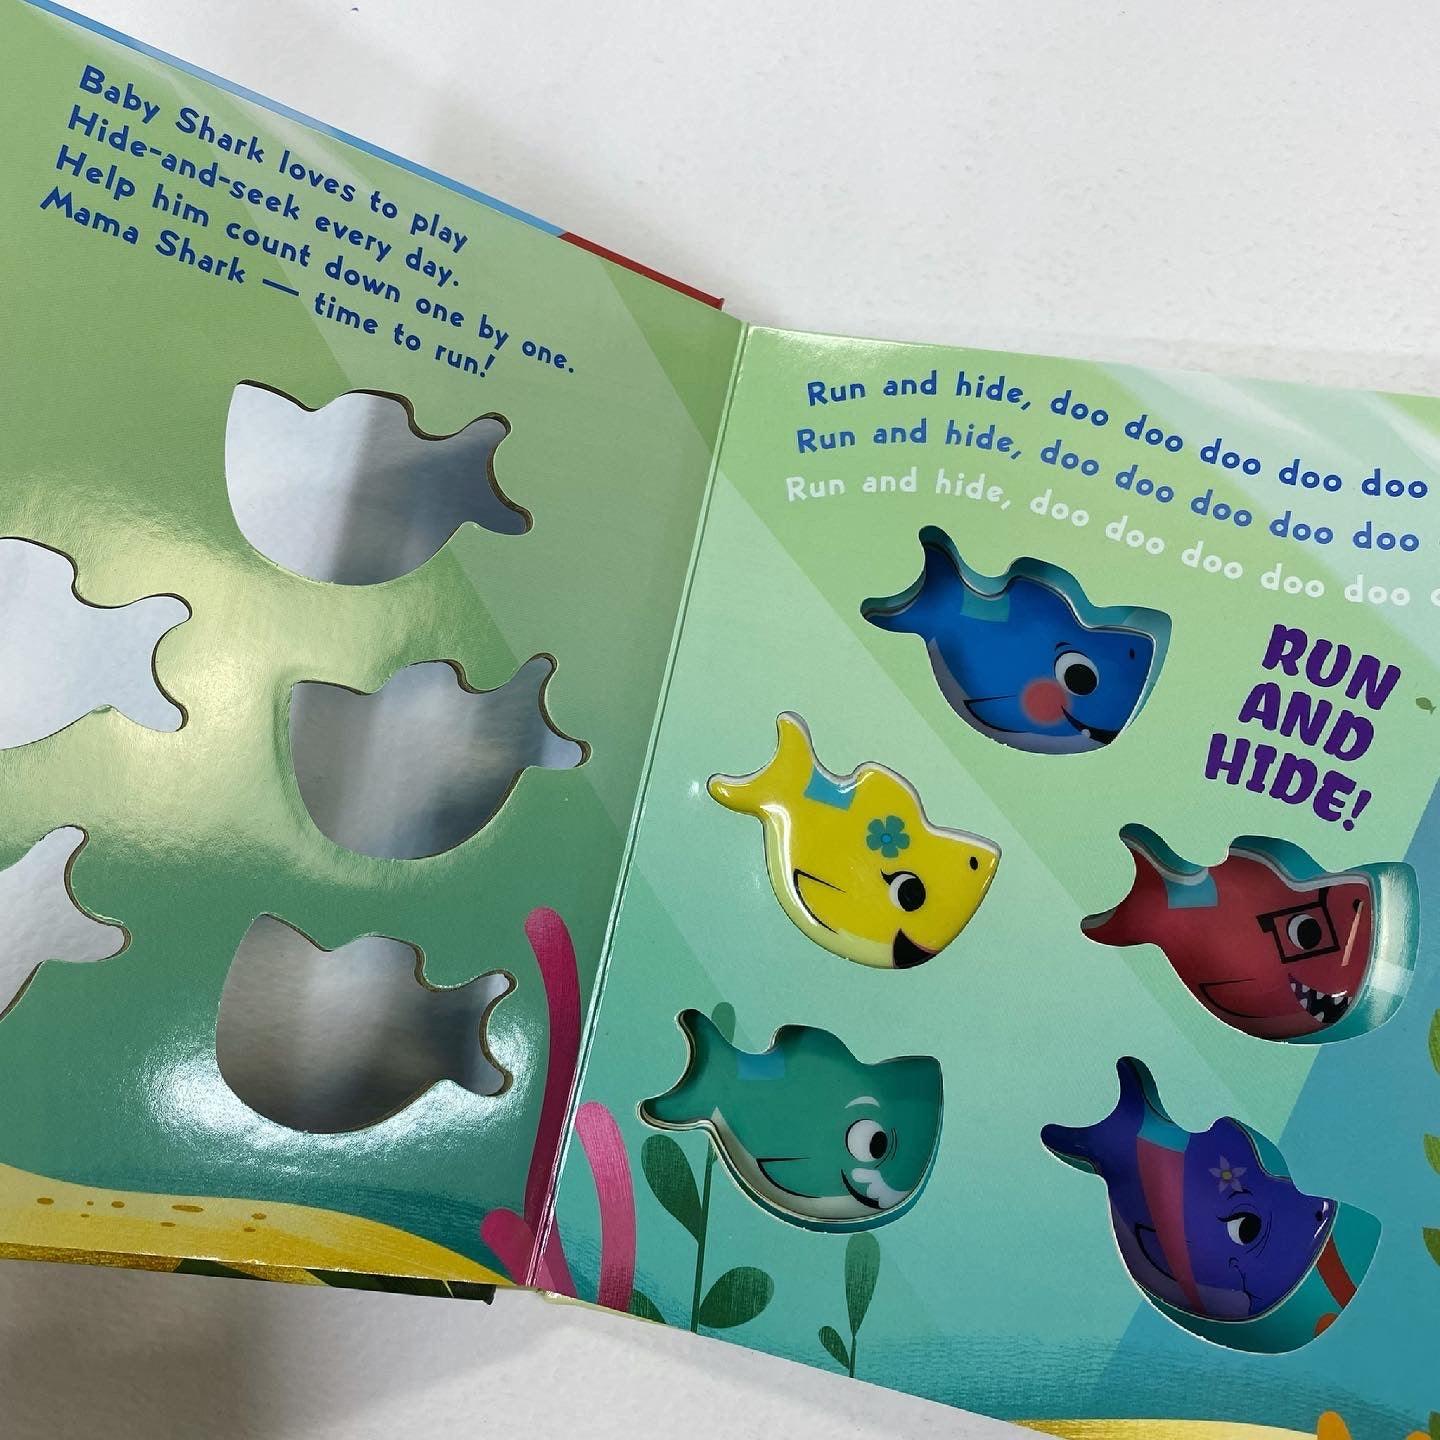 A Baby Shark Book Hide-and-Seek - Baby Shark! - Spectrawide Bookstore